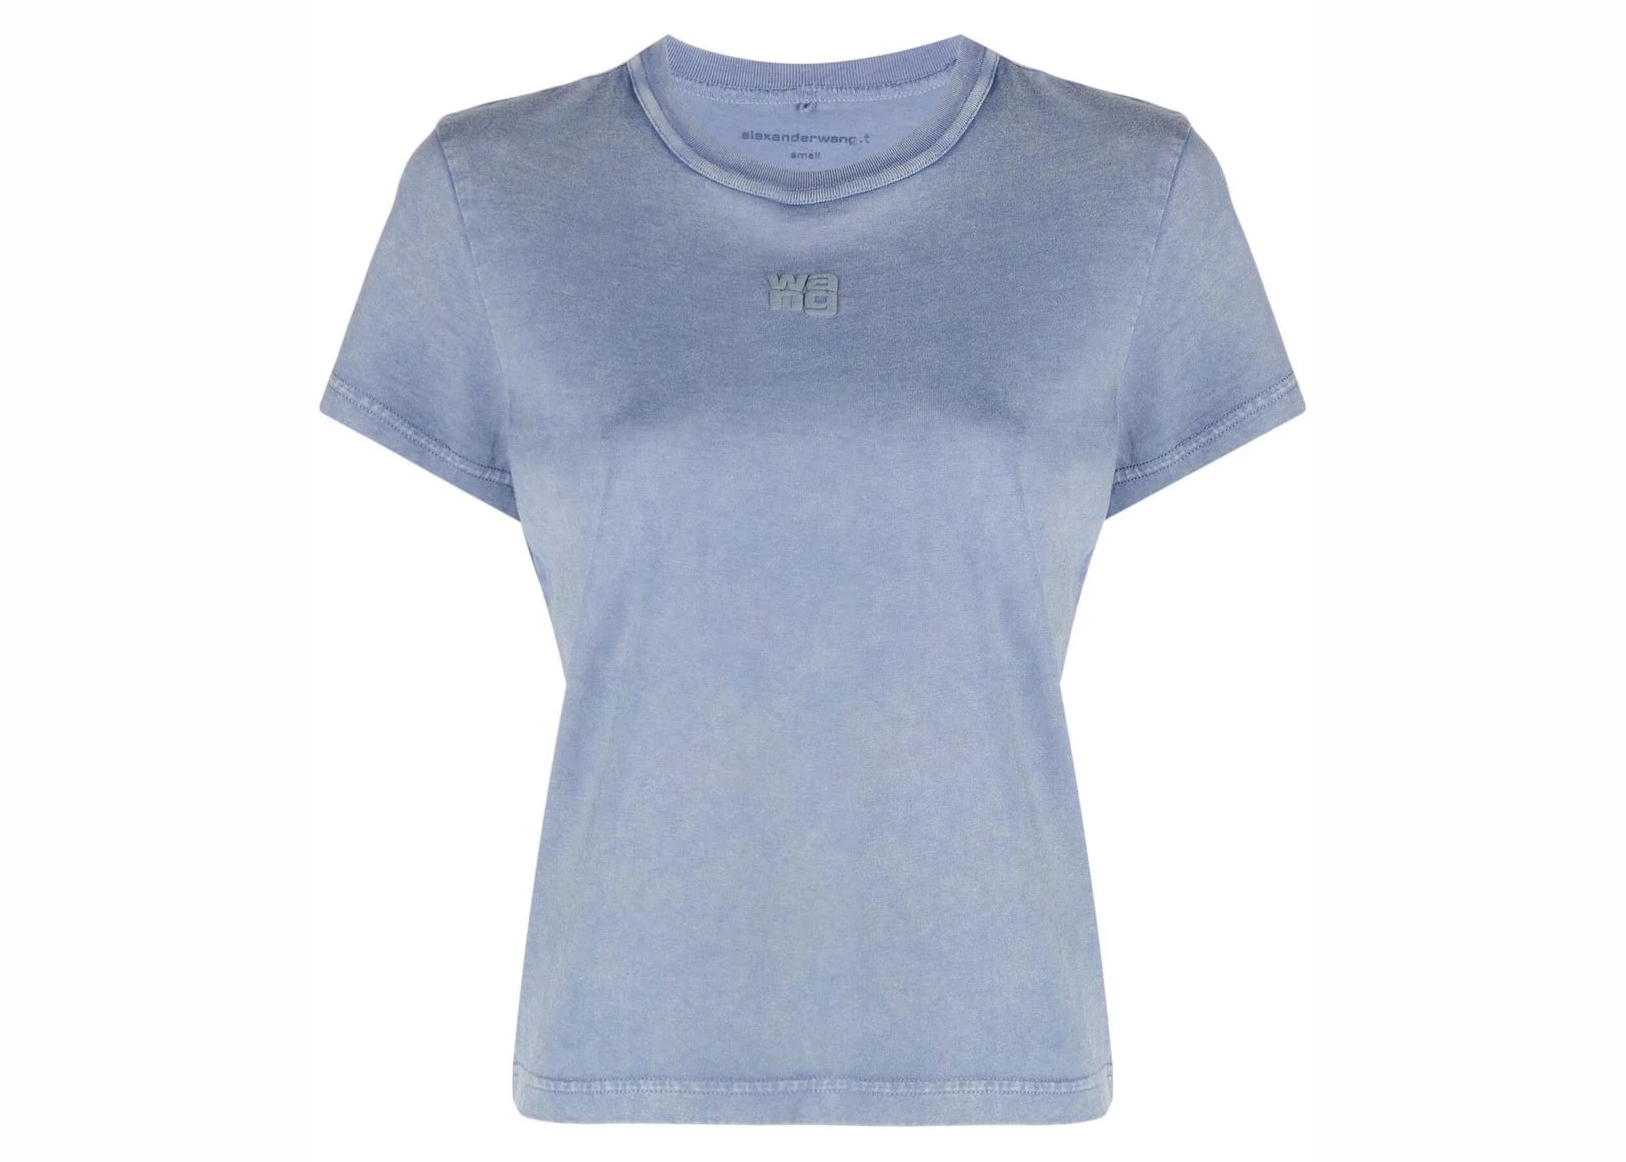 Alexander Wang x Uniqlo Heattech Baselayer Long Sleeve Shirt Size 10  eBay